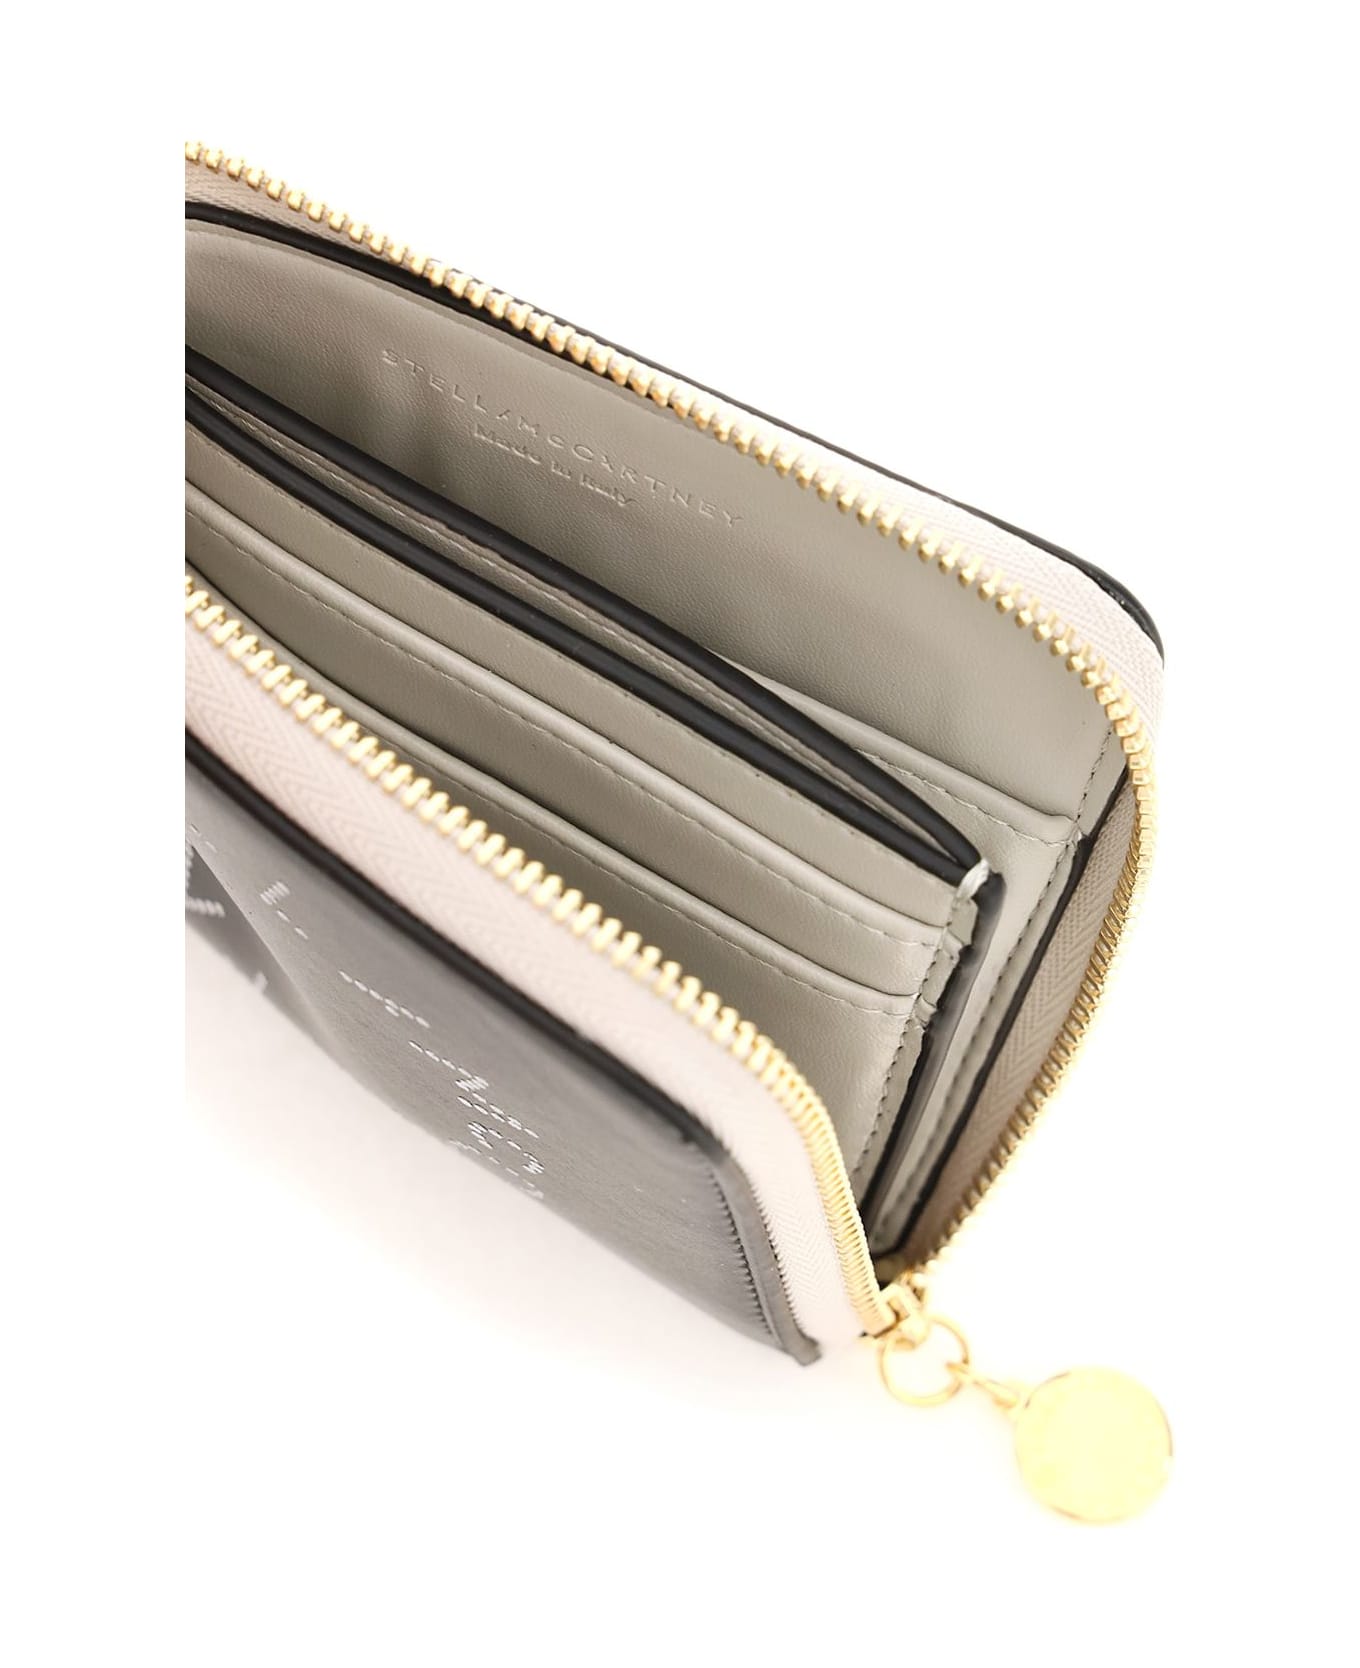 Stella McCartney Zipped Wallet - black 財布